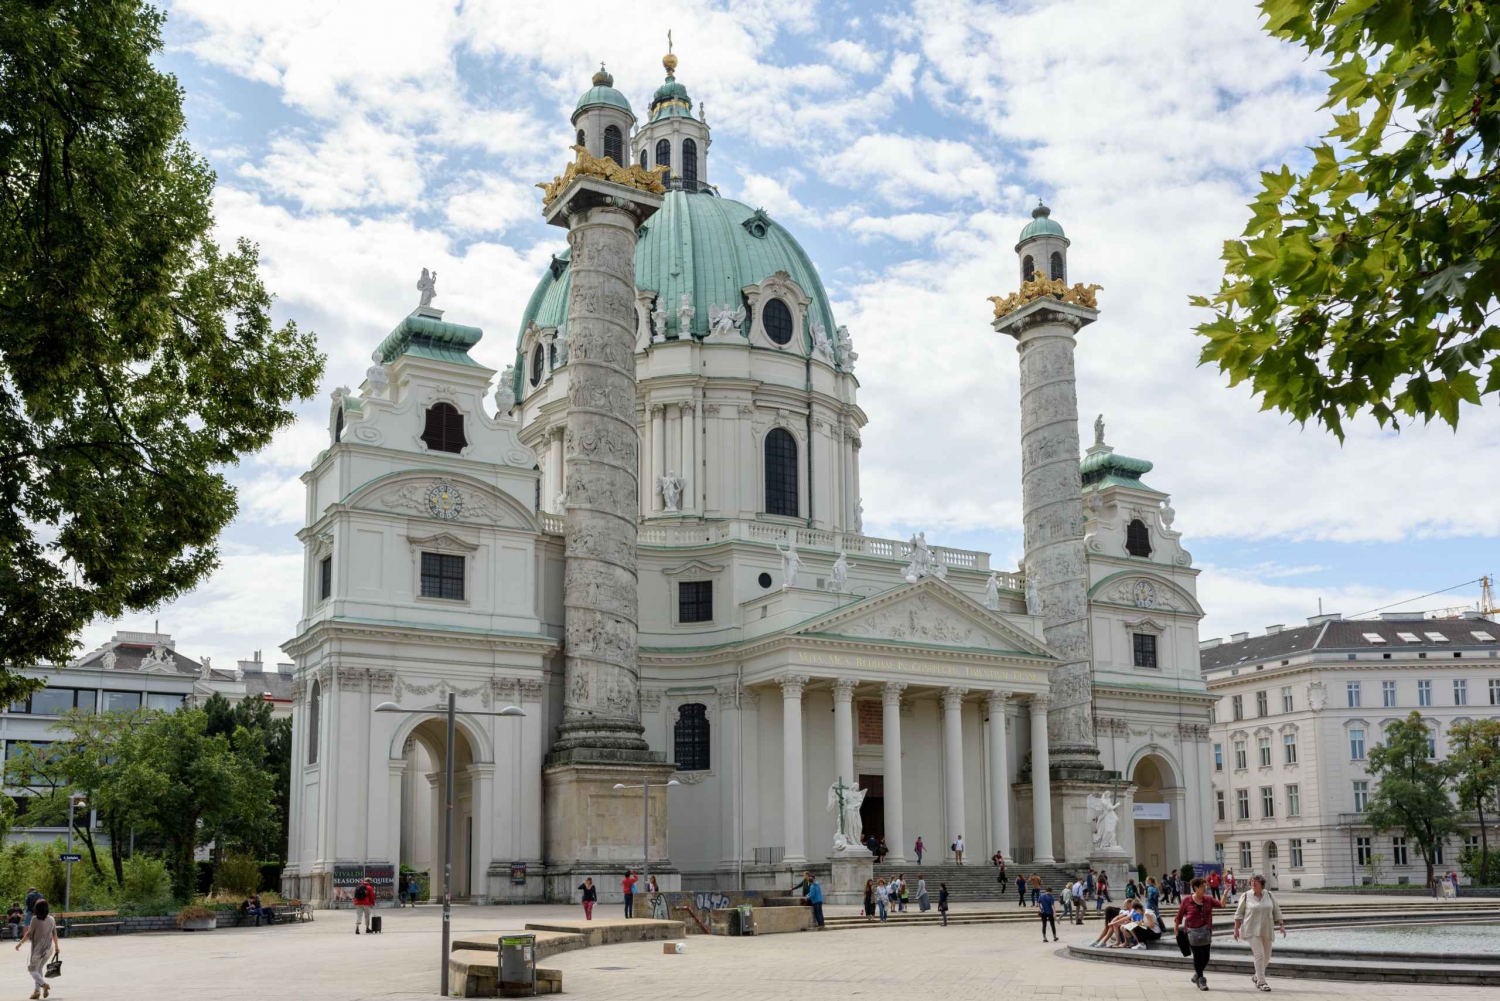 Vienna: Meet Strauss Private Guided Walking Tour